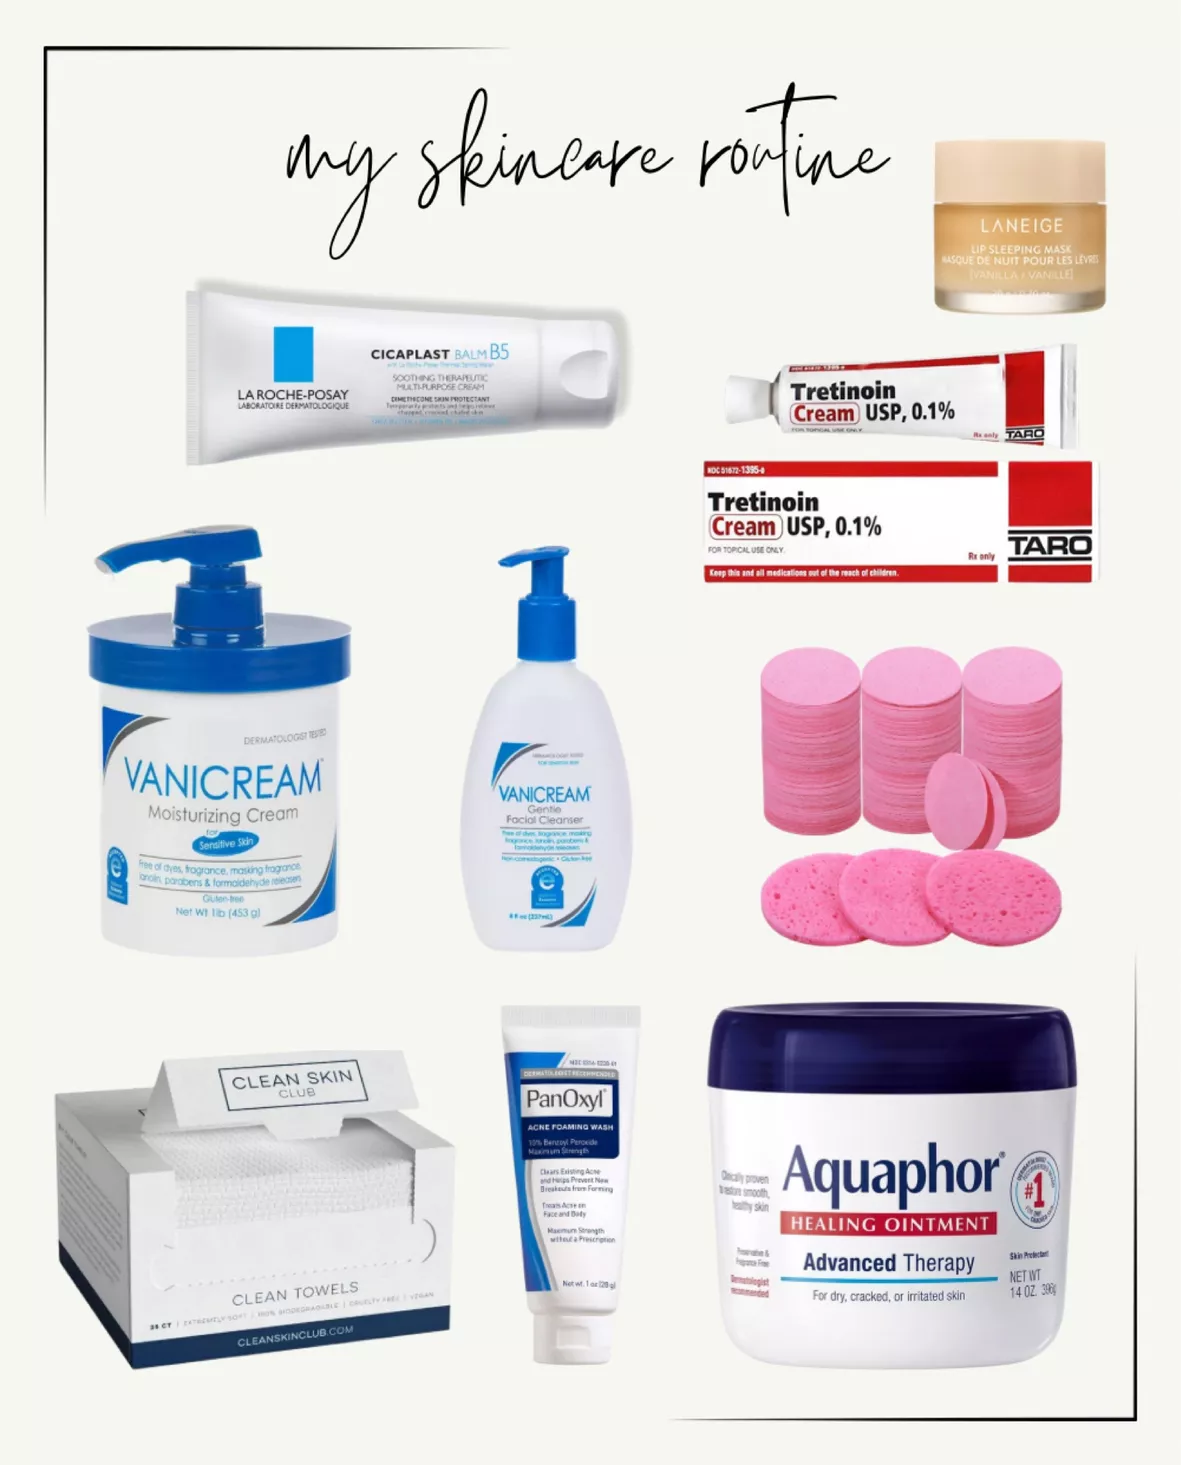 Prescription Skin Care Products for Women